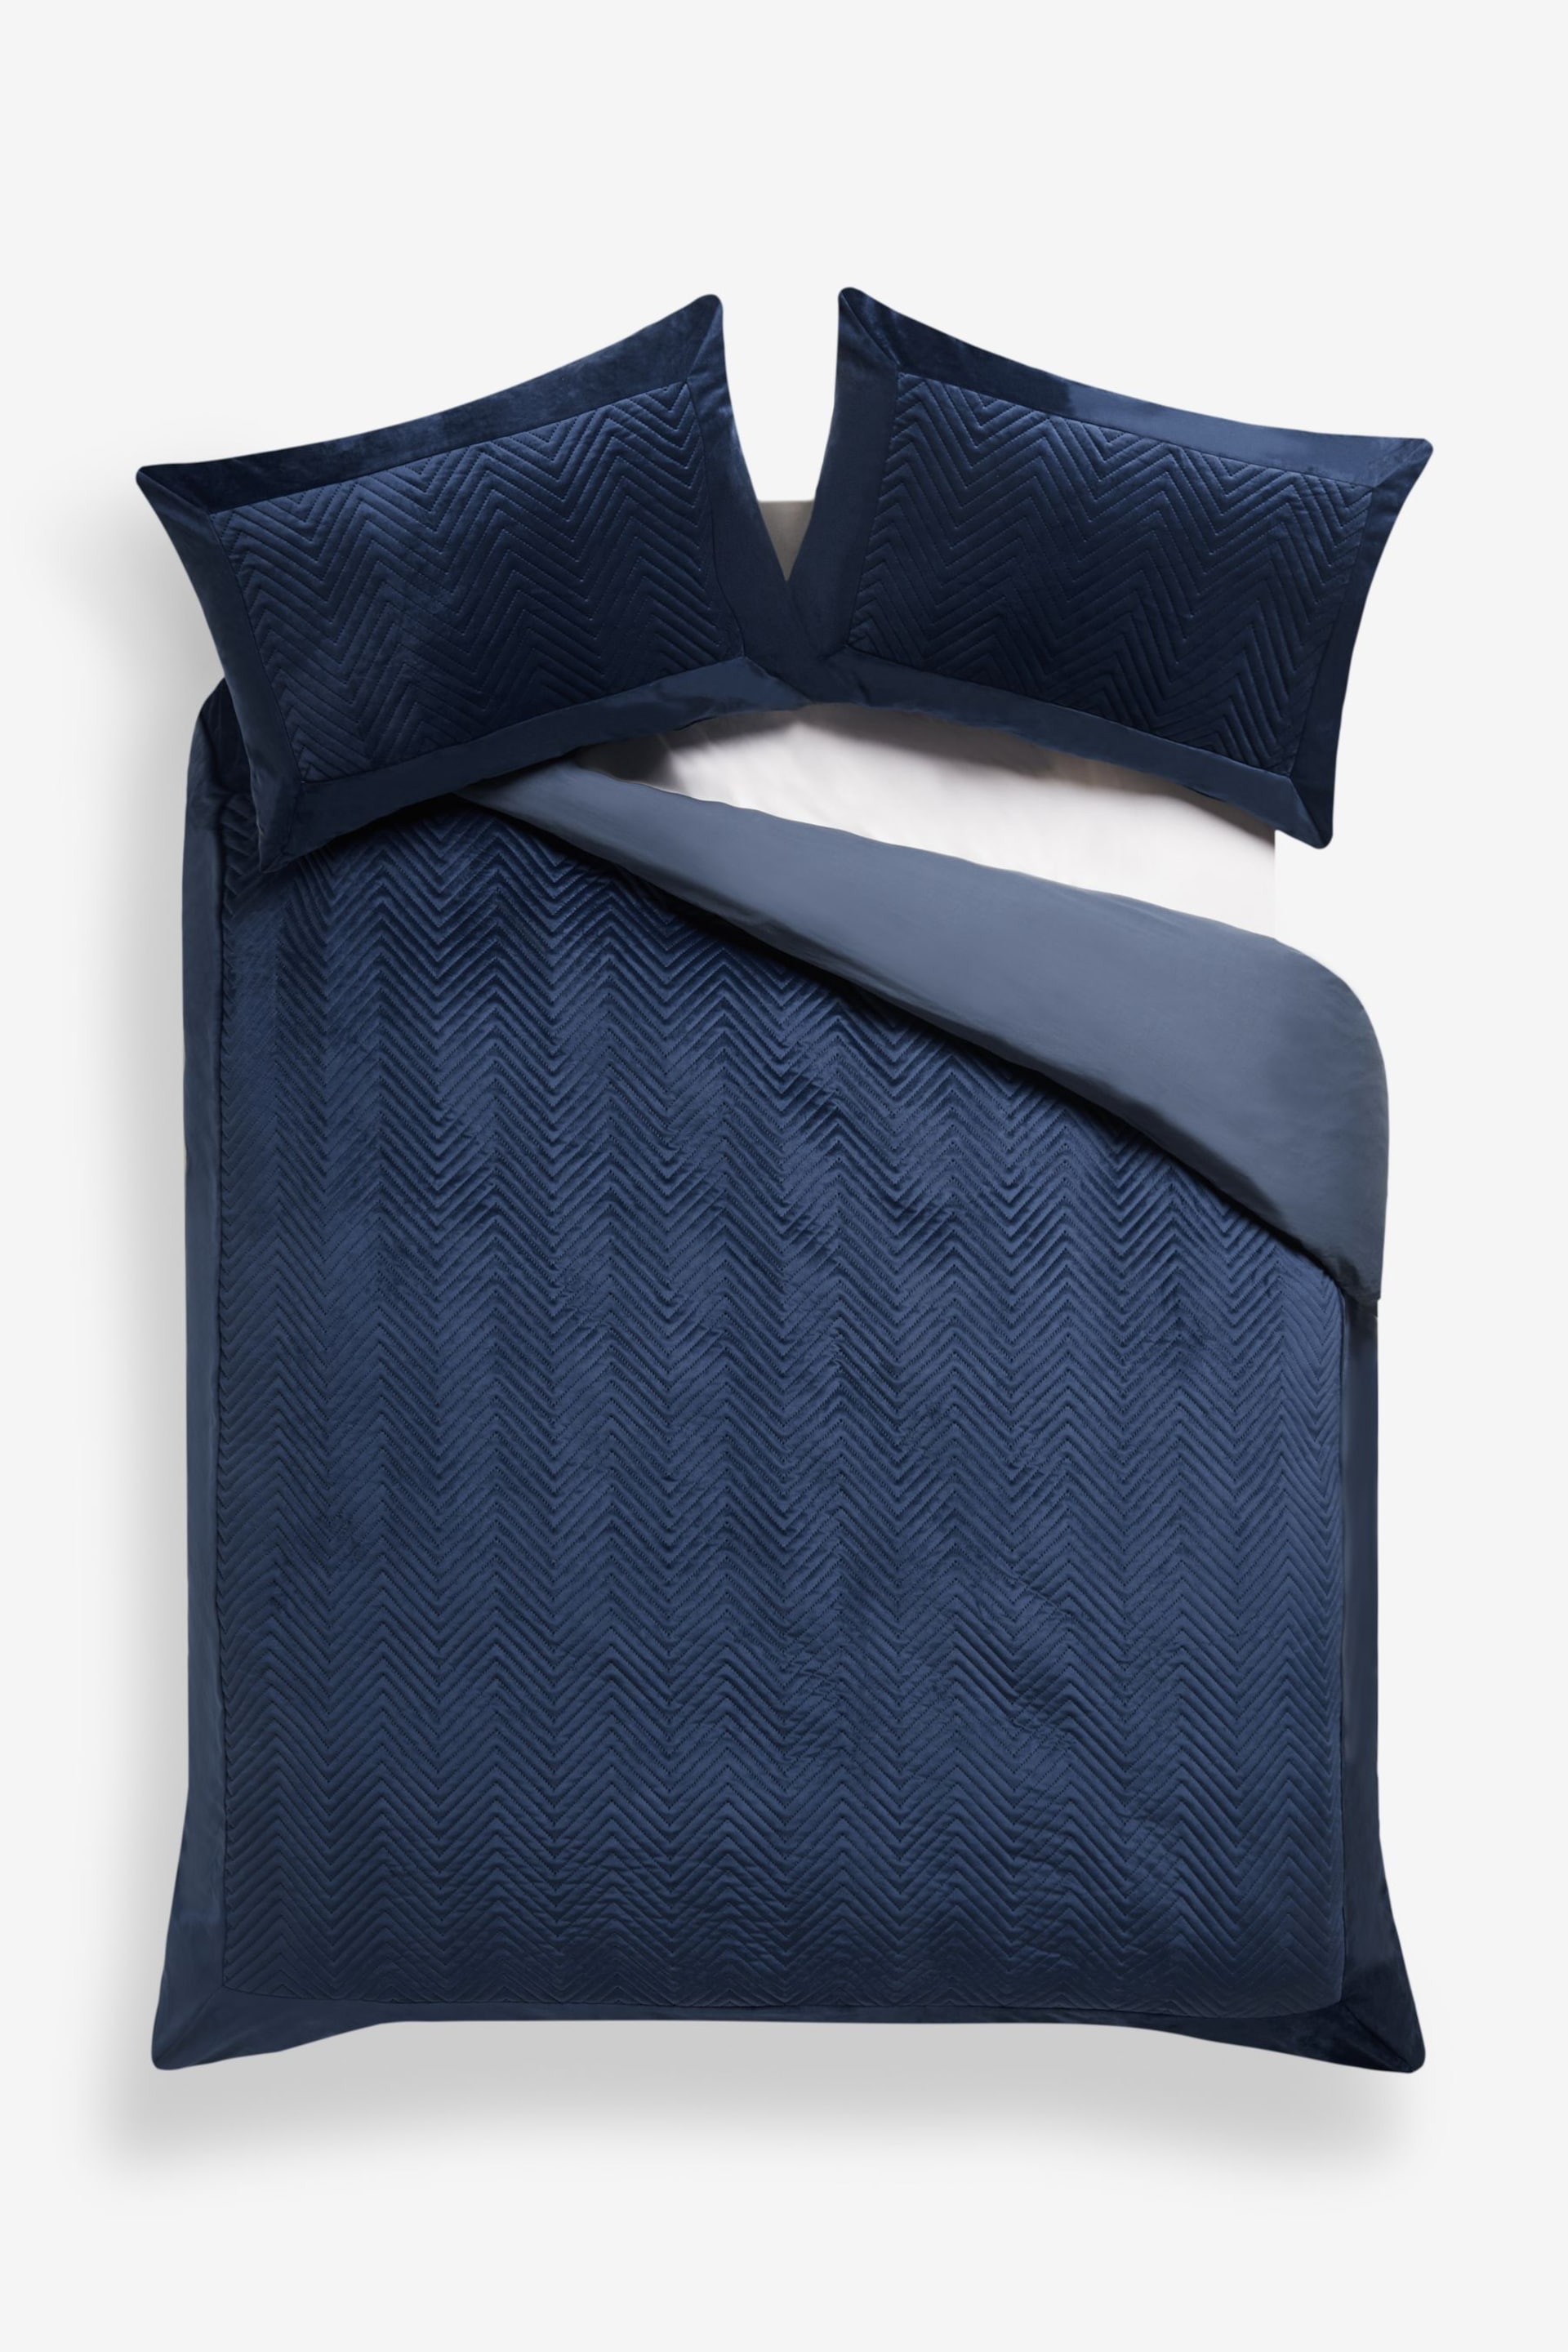 Navy Blue Madison Quilted Velvet Duvet Cover and Pillowcase Set - Image 3 of 4